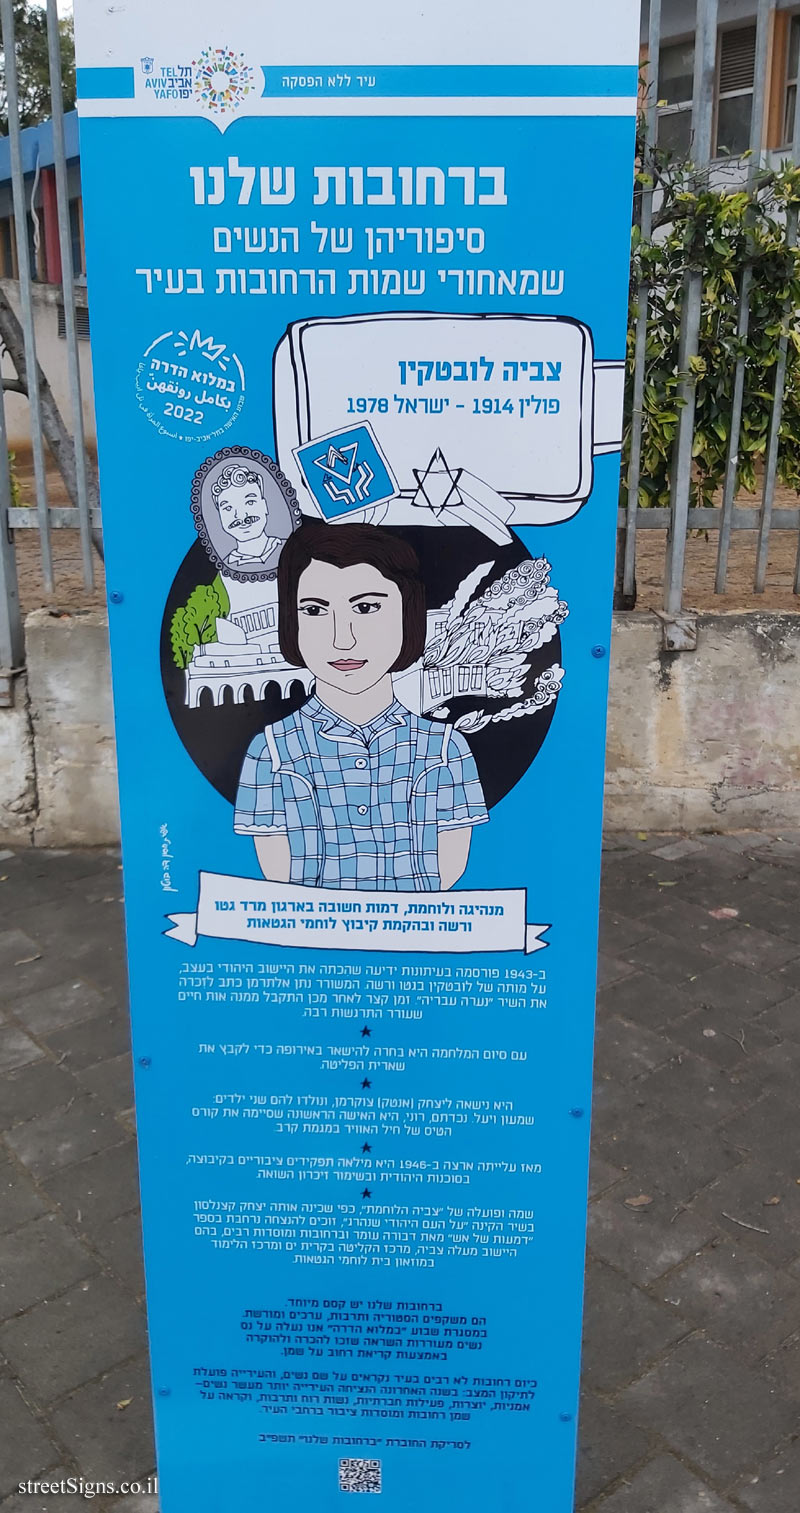 Tel Aviv - in our streets - Zivia Lubetkin